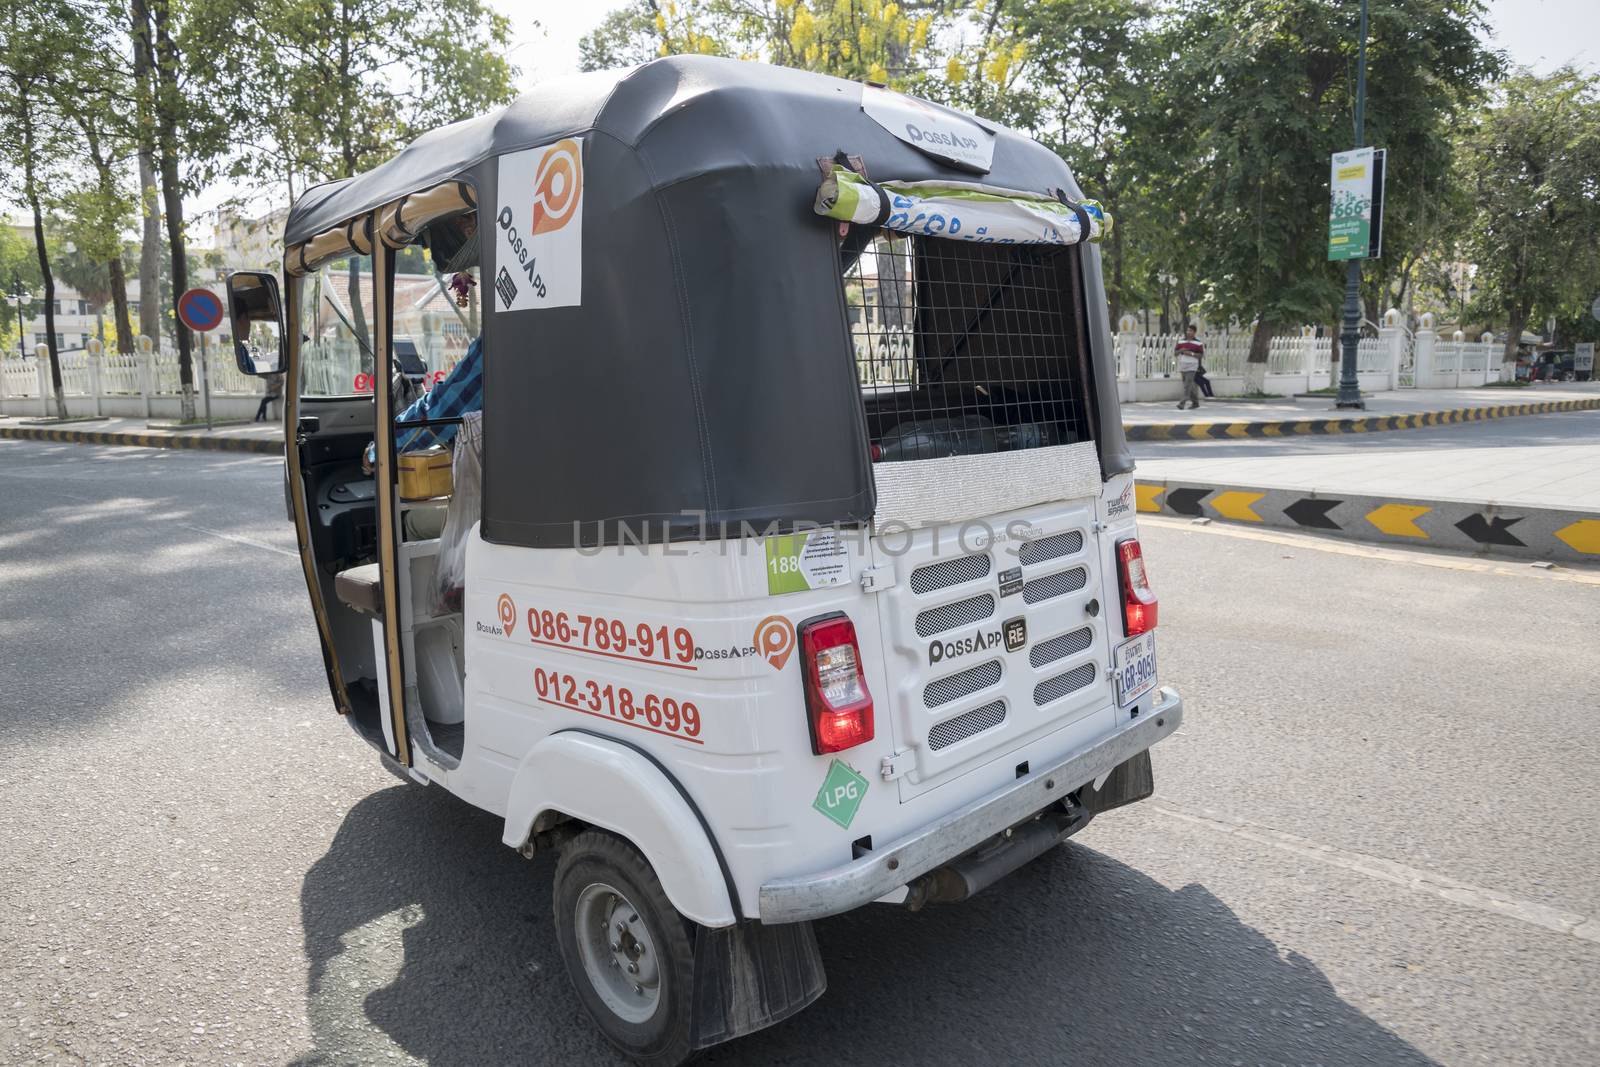 Rickshaw with PassApp Service, Phnom Penh, Cambodia by GABIS